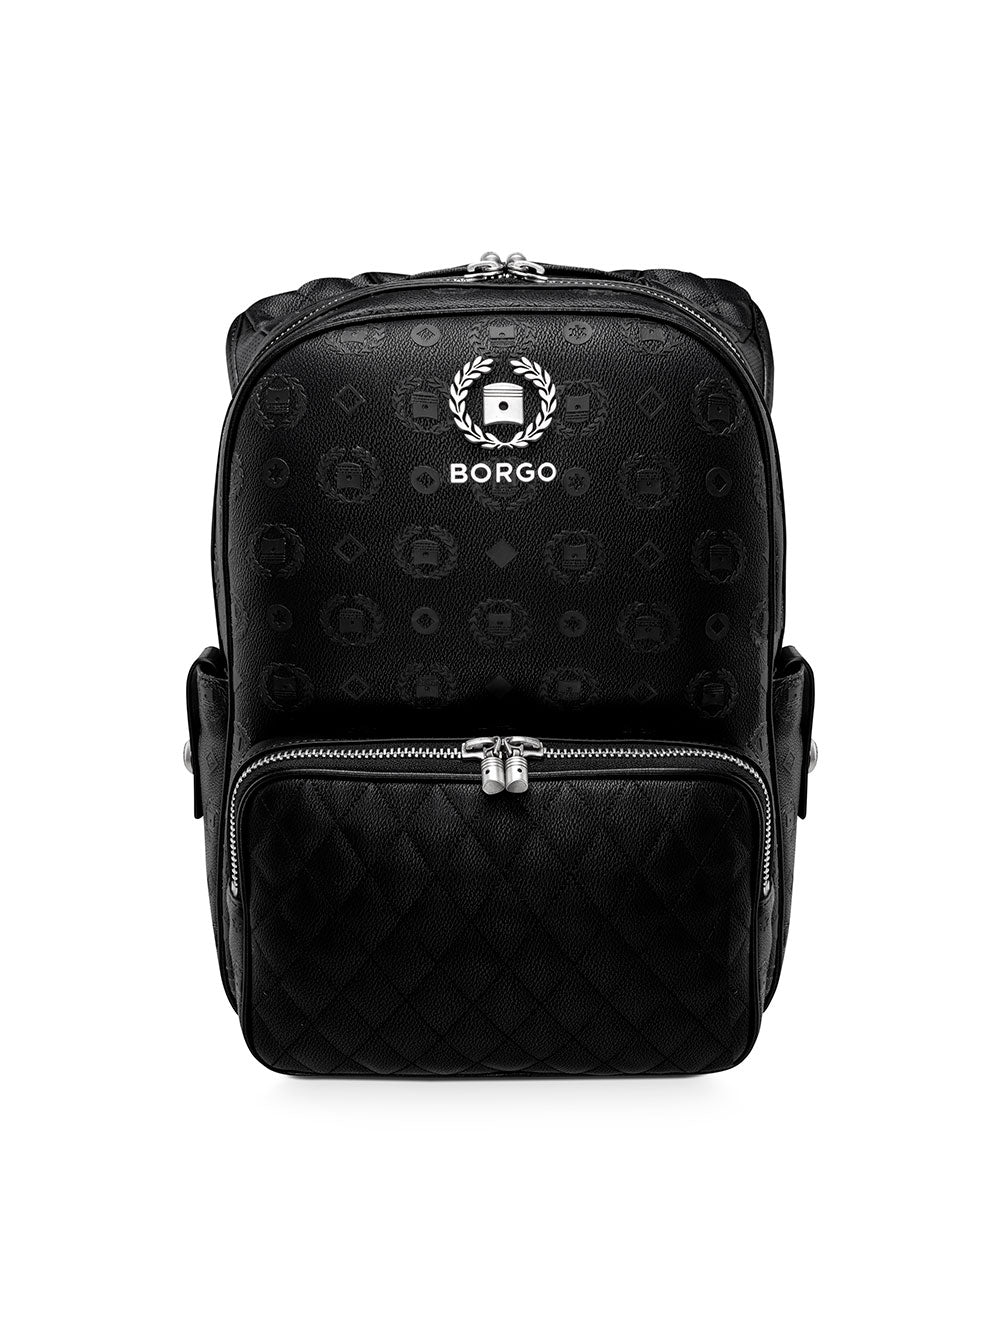 BORGO Nardo Camo Weekender Bag - BORGO ® OFFICIAL